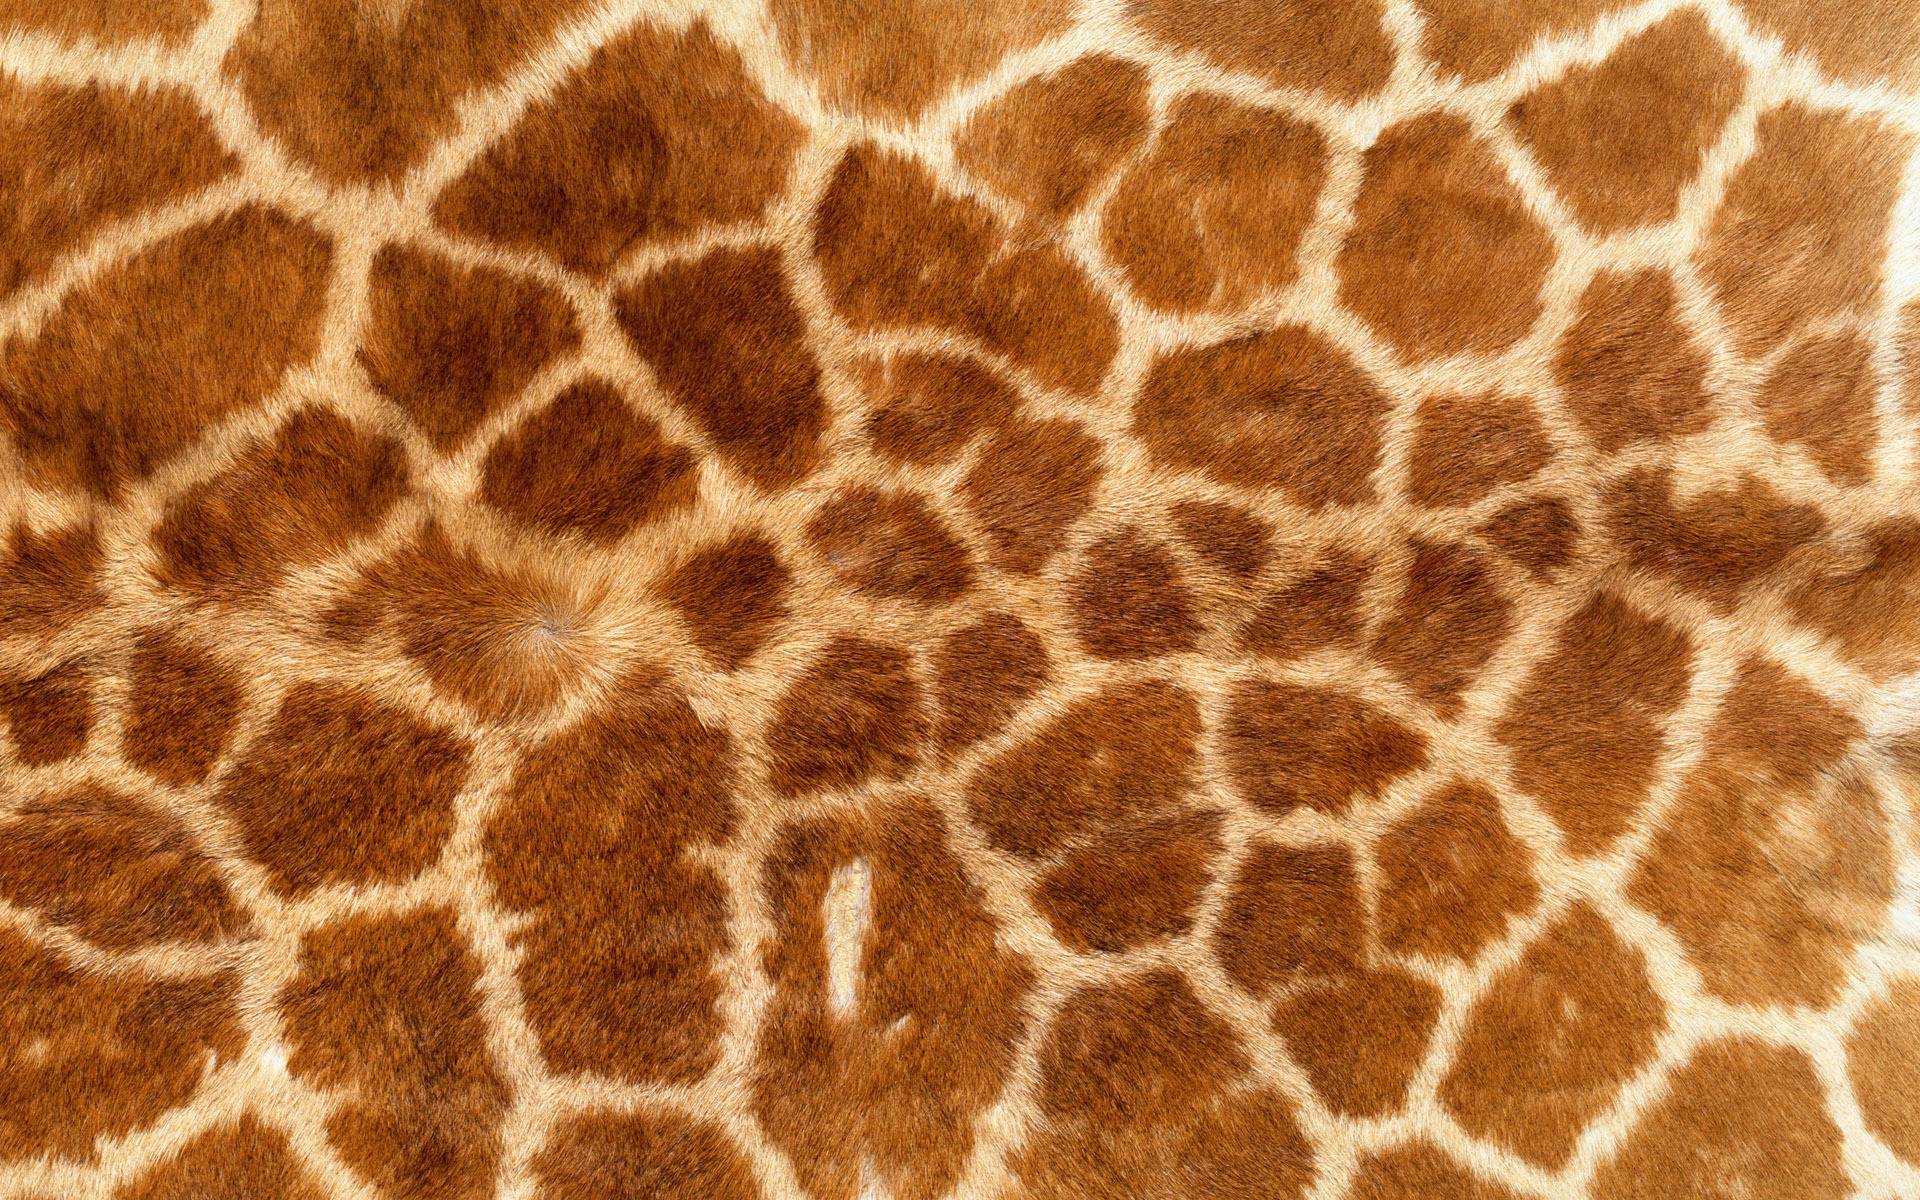 Download texture: download, texture giraffe, photo, background